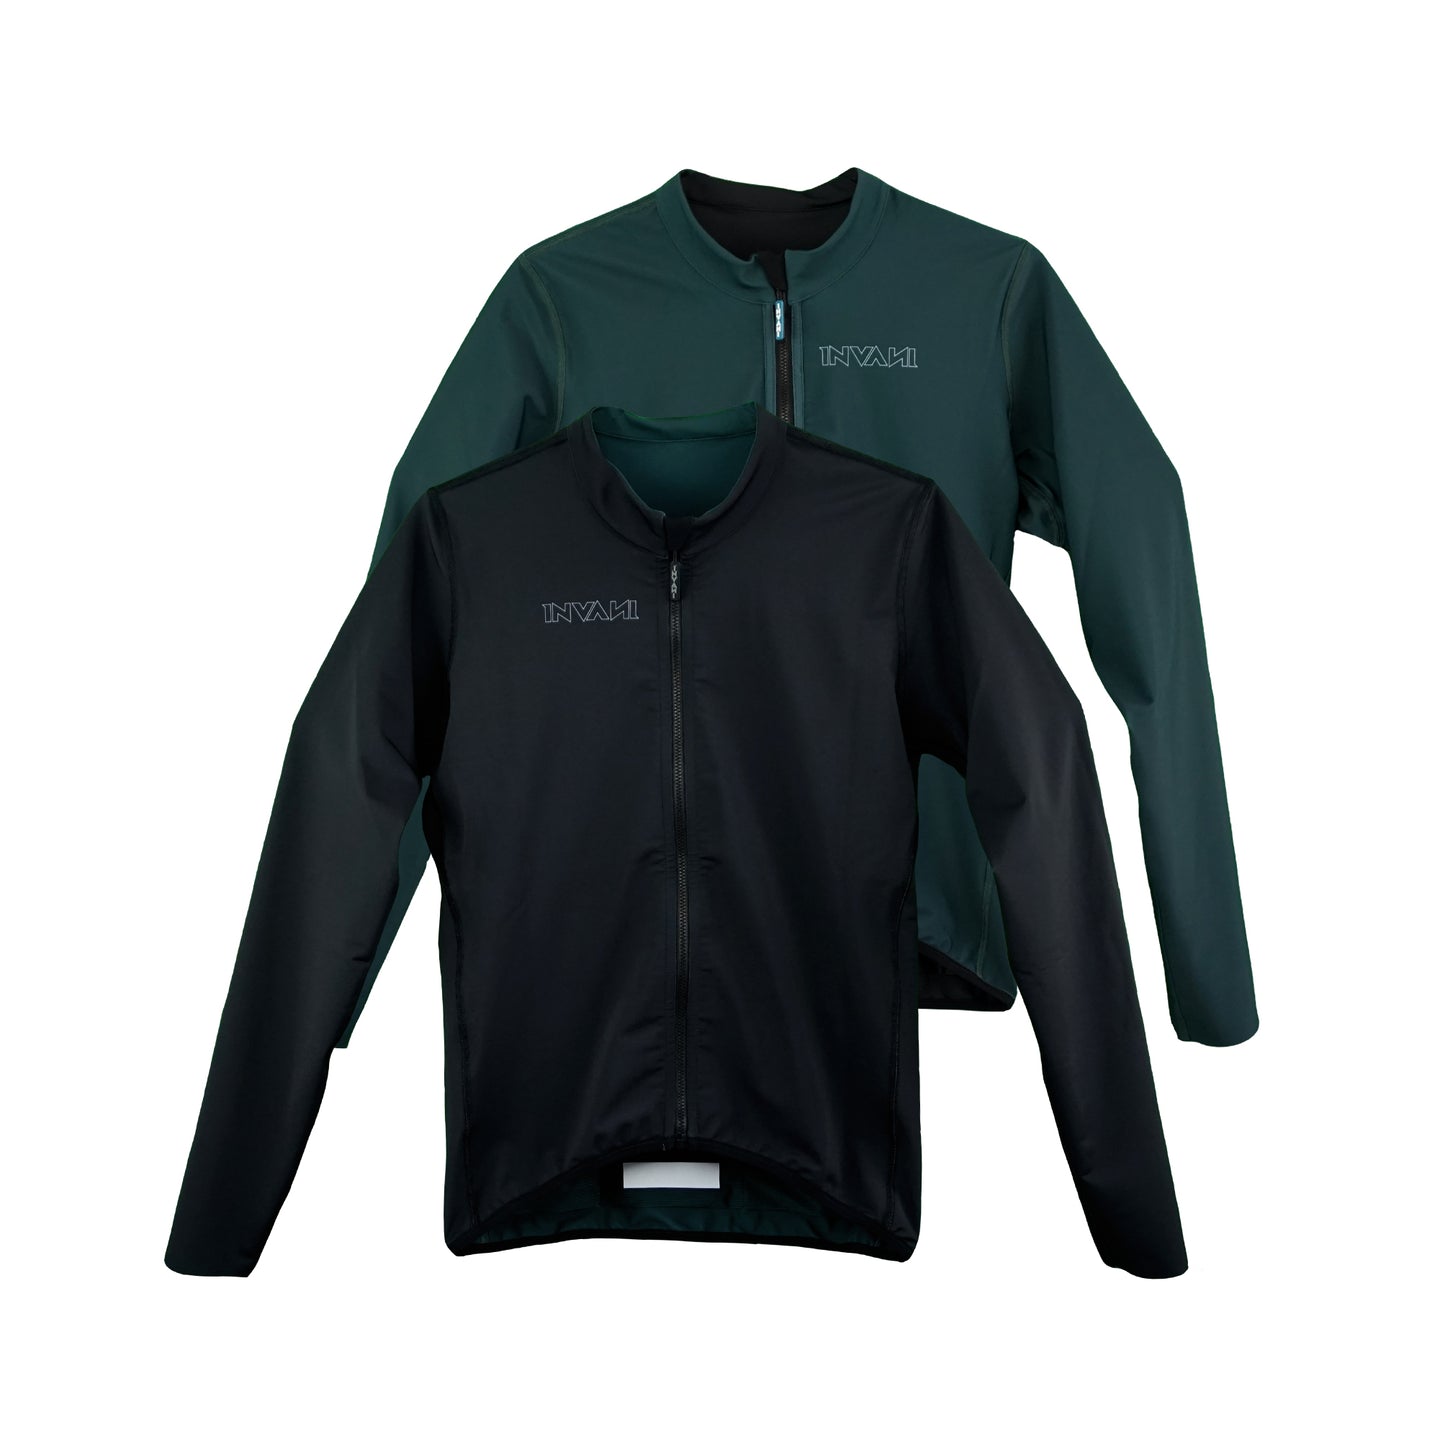 Reversible Slim Fit Long Sleeve Jersey: Black / Dark Green (Men's)